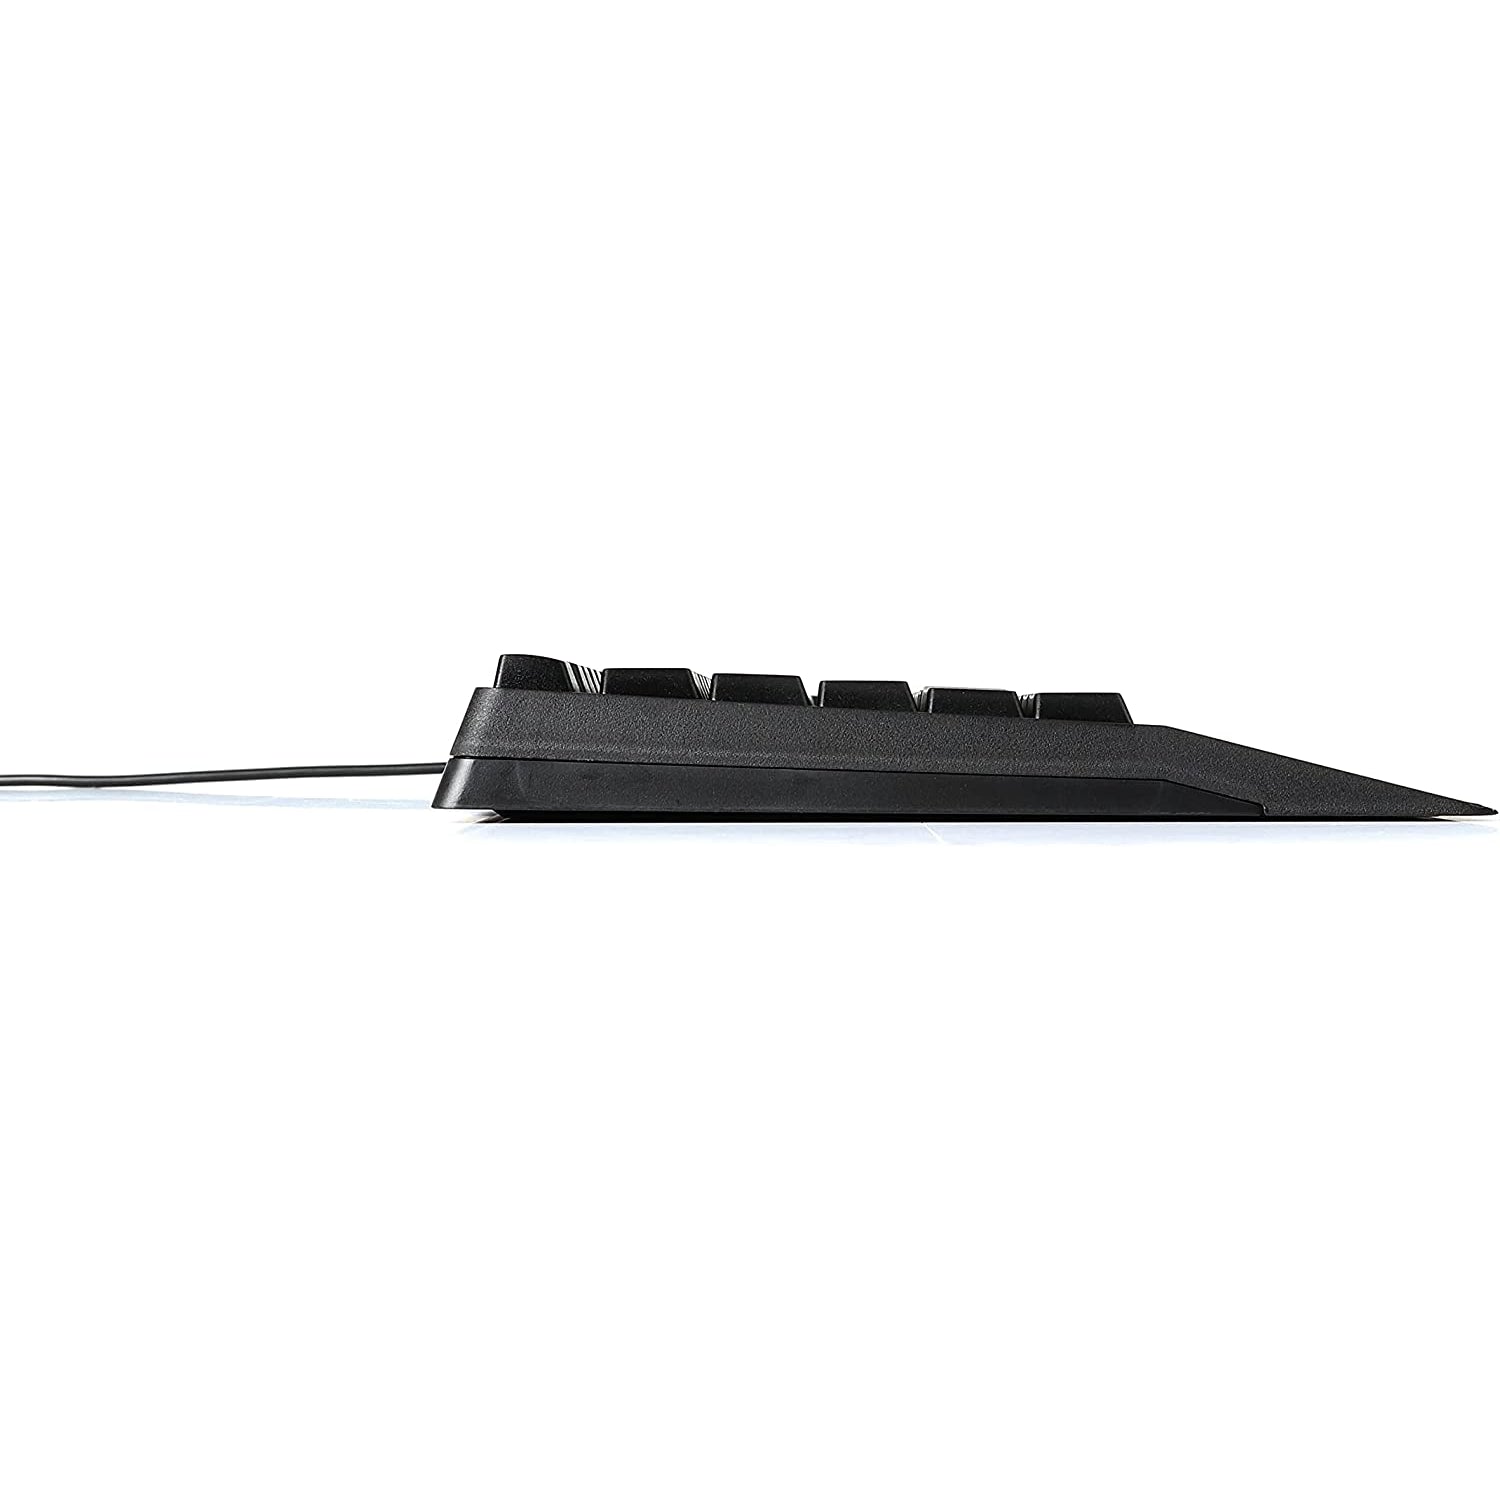 Rapoo NK2000 Spill Resistant Wired Keyboard, Black - Refurbished Excellent